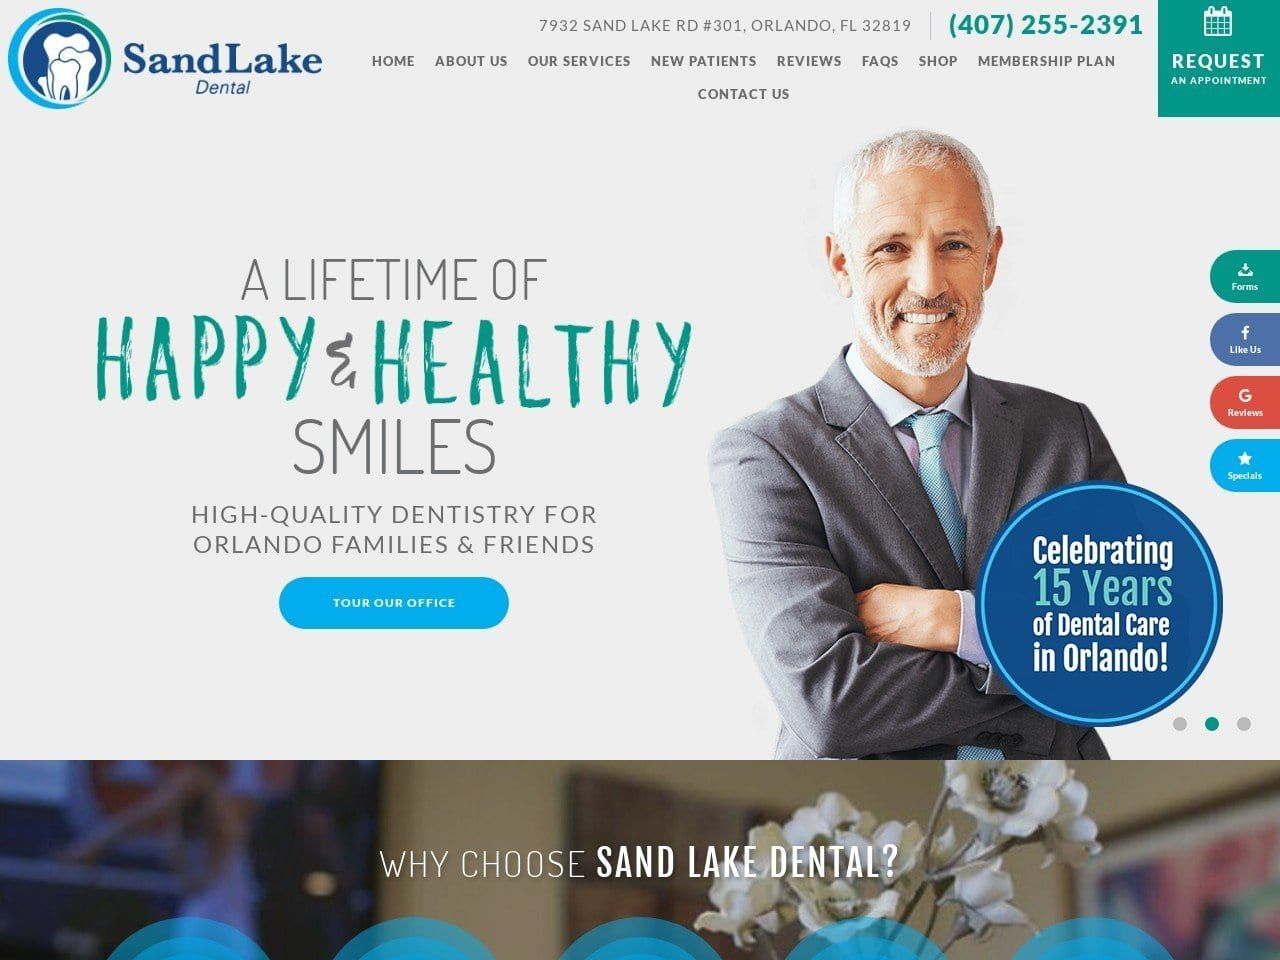 Sandlake Dental; Ziyad Maali D.M.D. Website Screenshot from sandlakedental.com